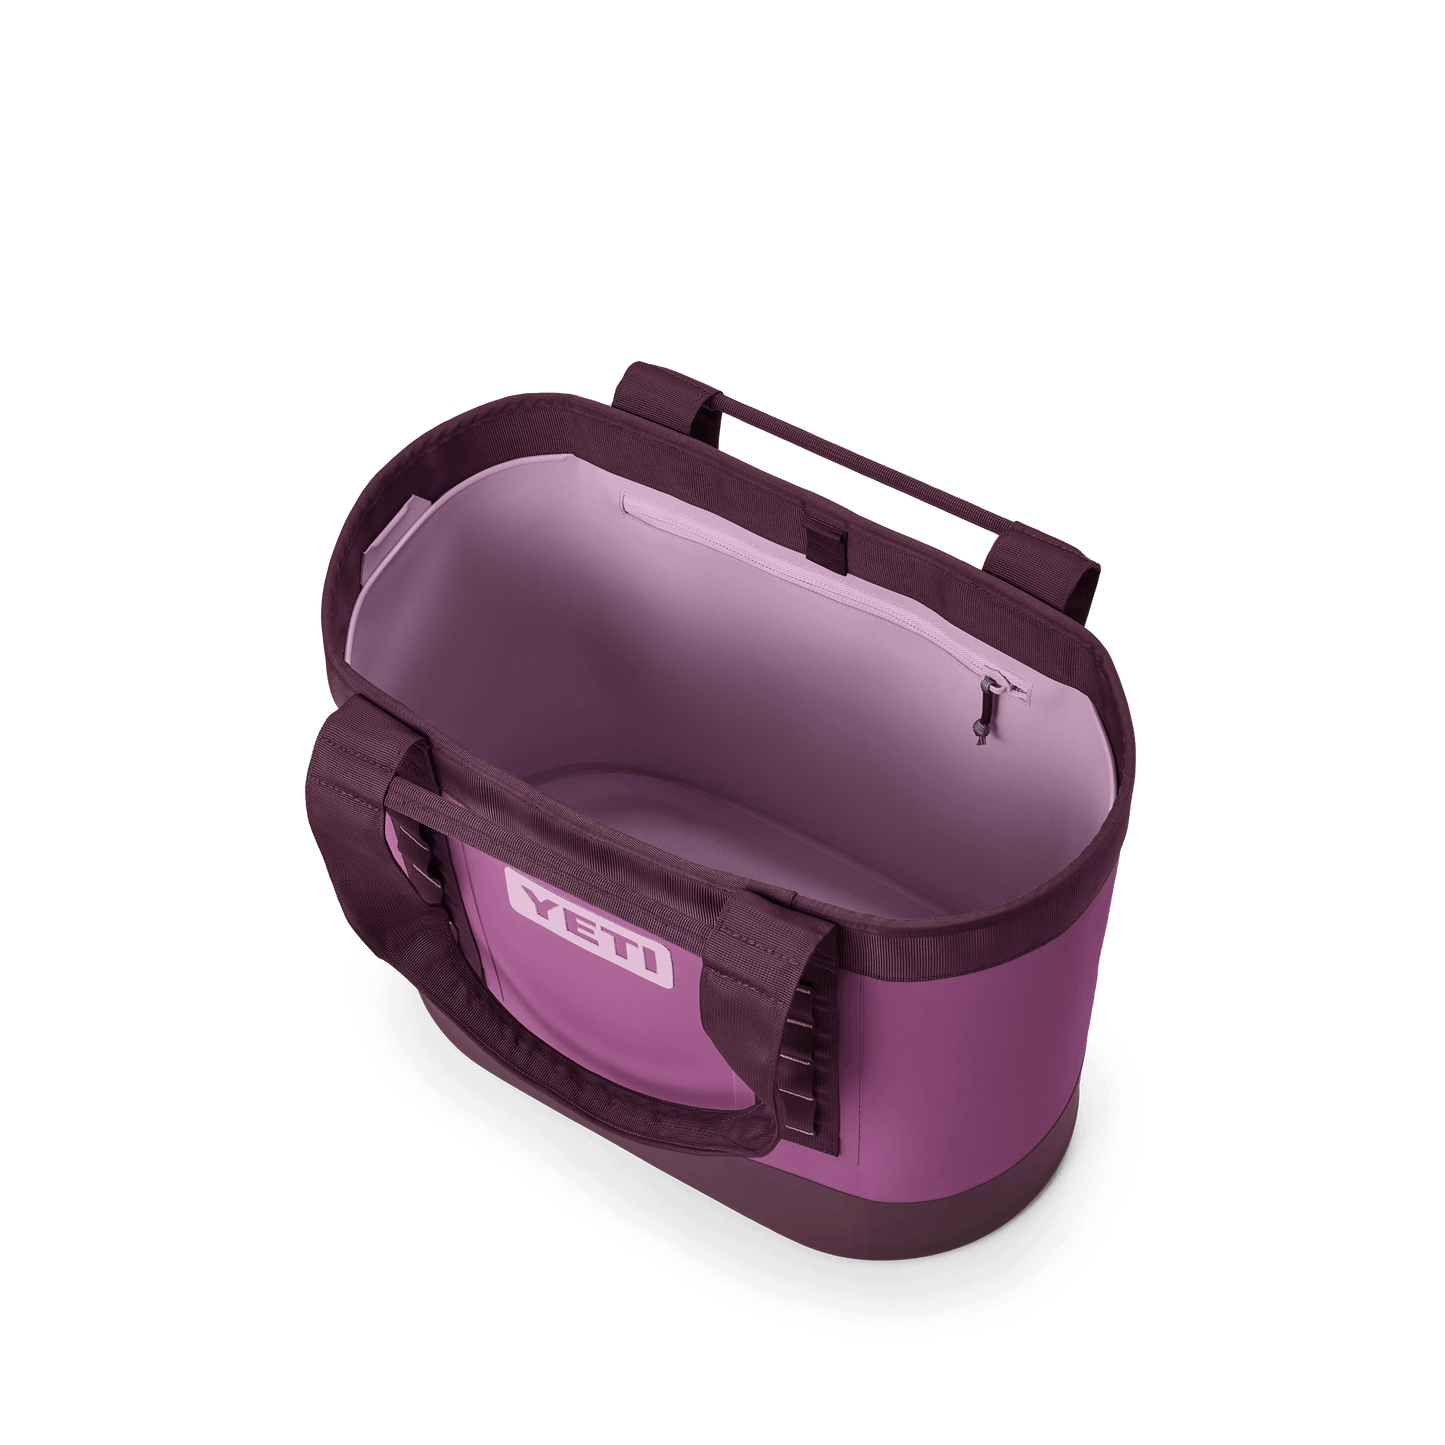 YETI Camino® 35 L Carryall Nordic Purple